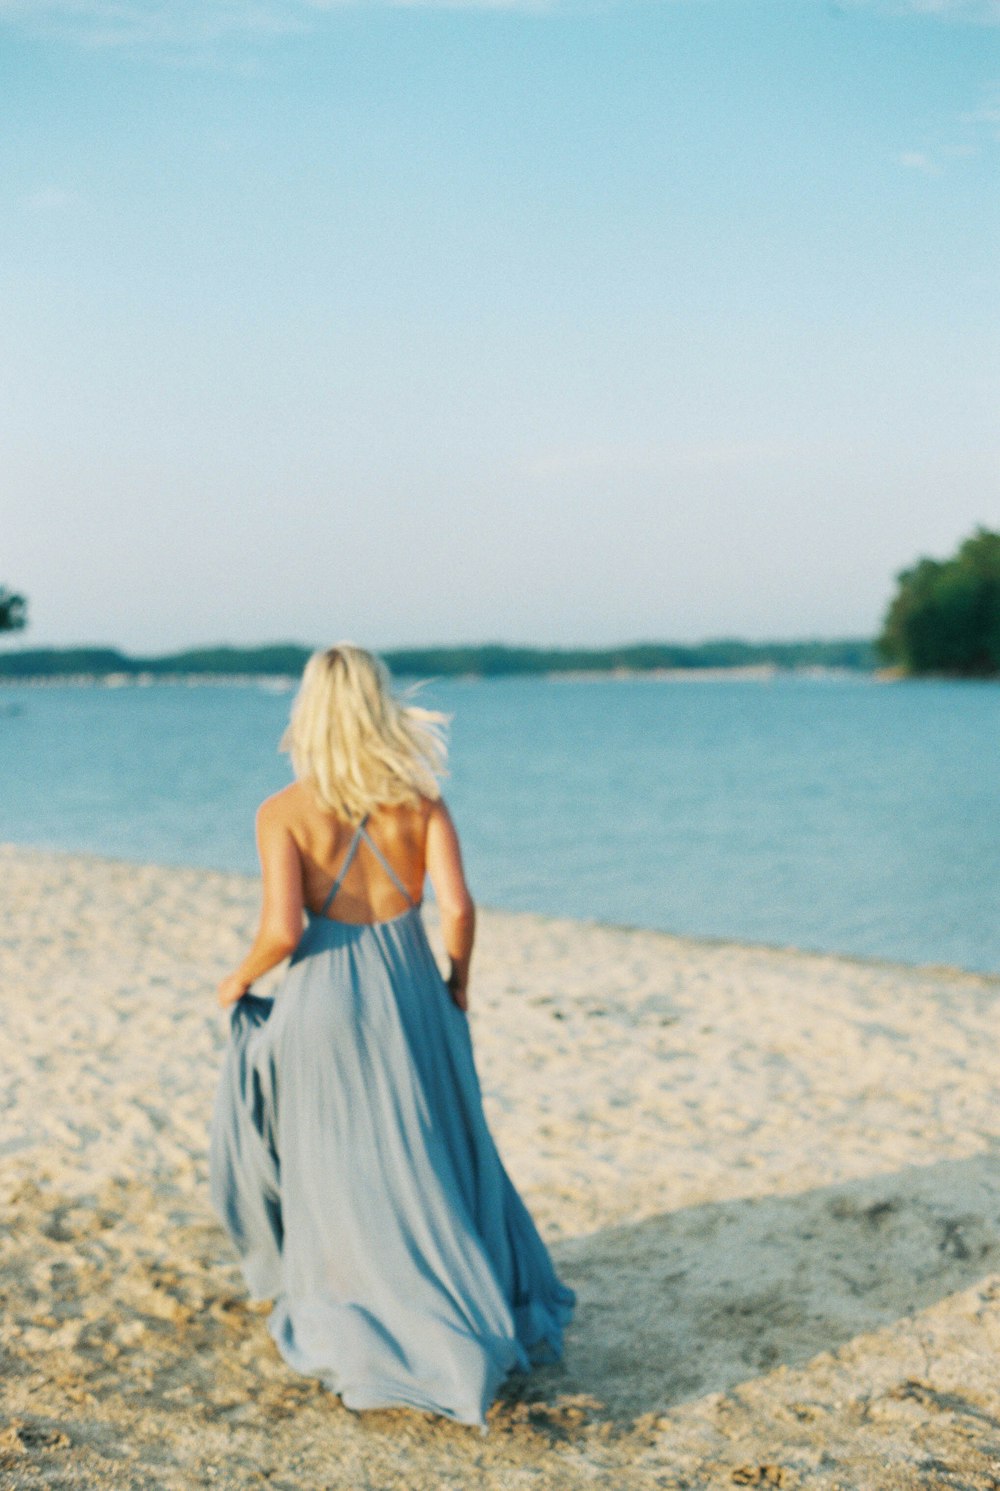 a woman in a blue dress walking on a beach